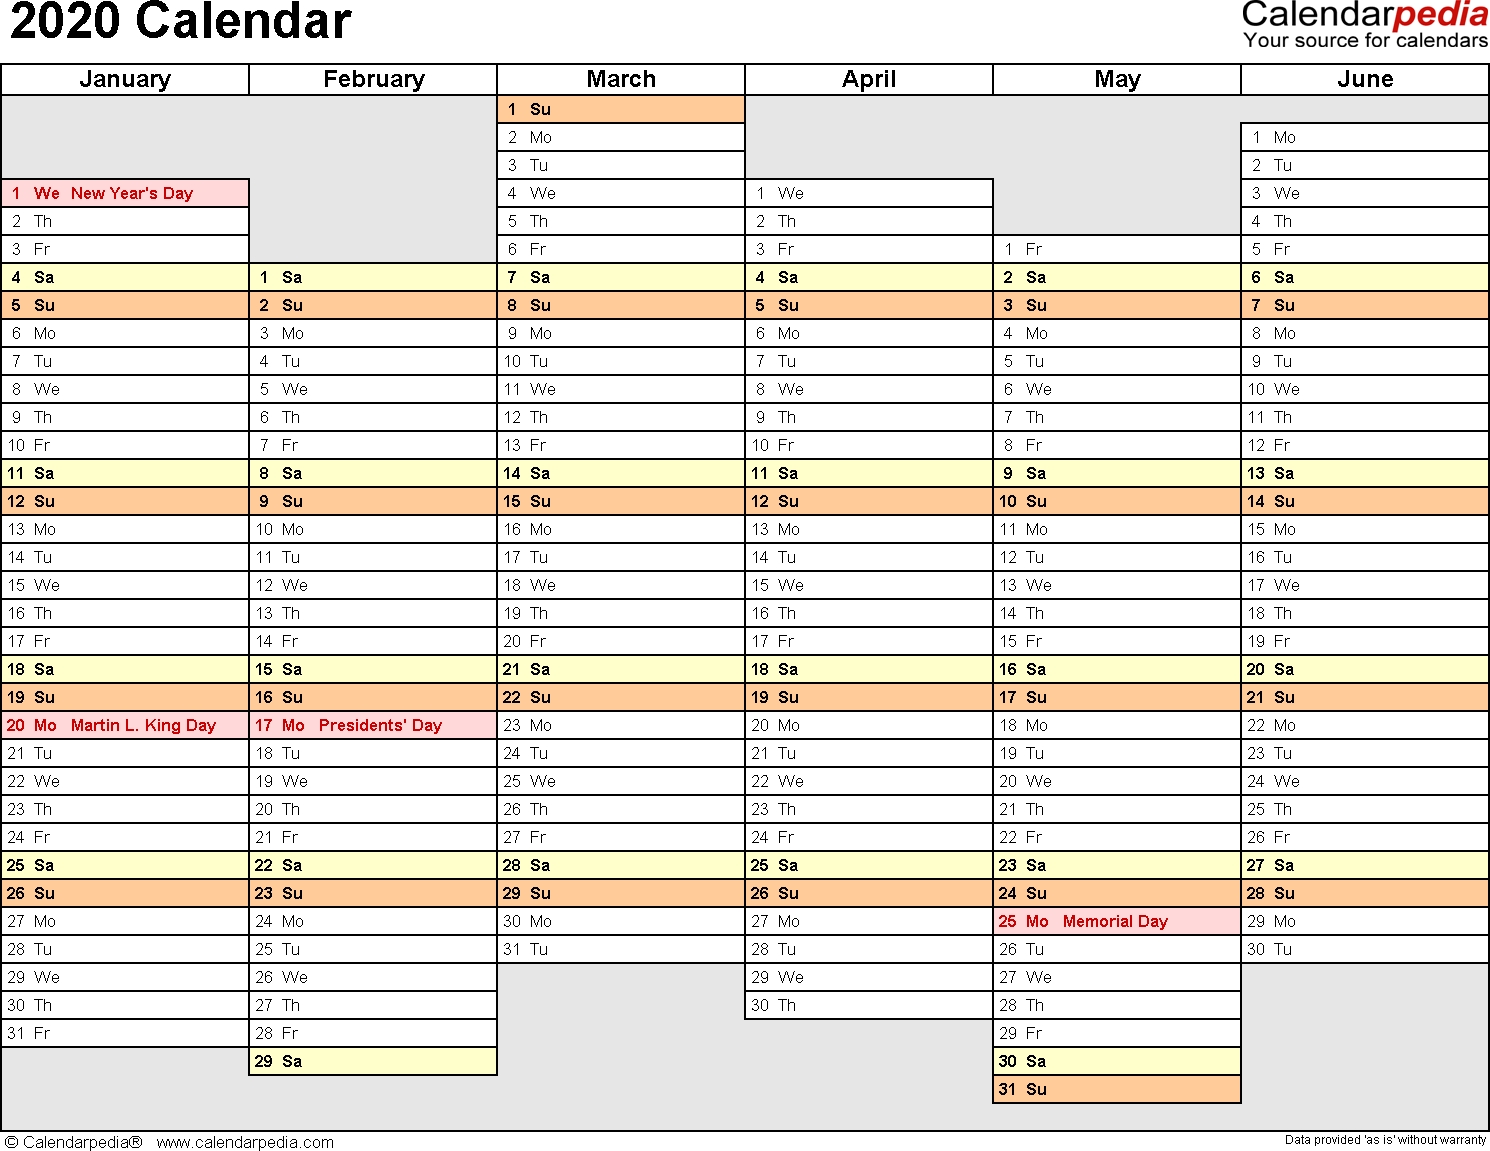 2020 Calendar - Free Printable Microsoft Word Templates Incredible Calendarpedia 2020 For South Africa